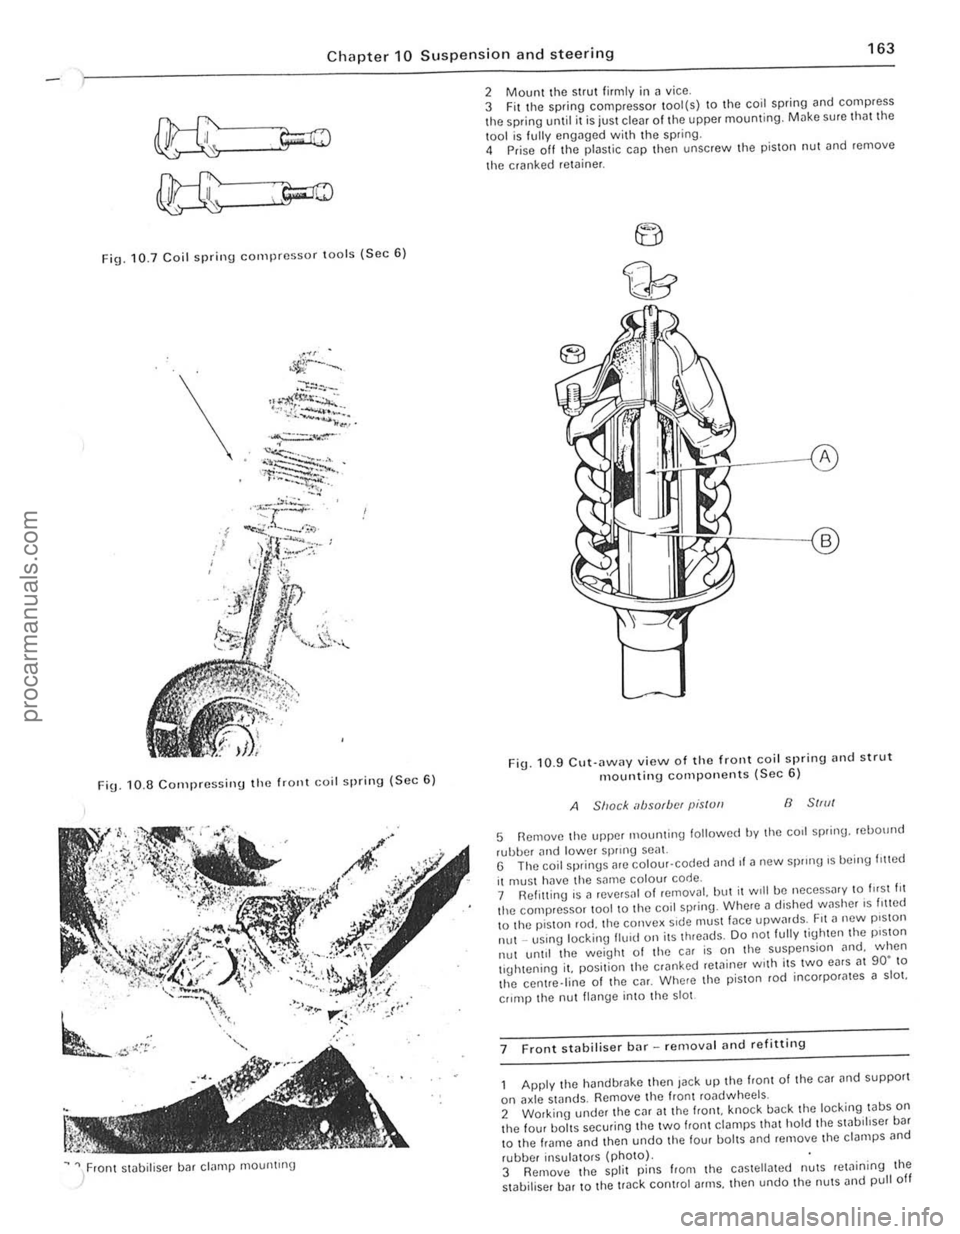 FORD CAPRI 1974  Workshop Manual Chapter 10 S uspension and steering 163 
~~--,,$iJO 
~~\~ 
Fig. 10.7 Coil spri n g compressor lOo ls  (Sec 6 ) 
\. 
FiU. 1 0 .8 C o rn pressi nu  the frOllt Goil spring ( S ec 6) 
~ " / ron t stobilis